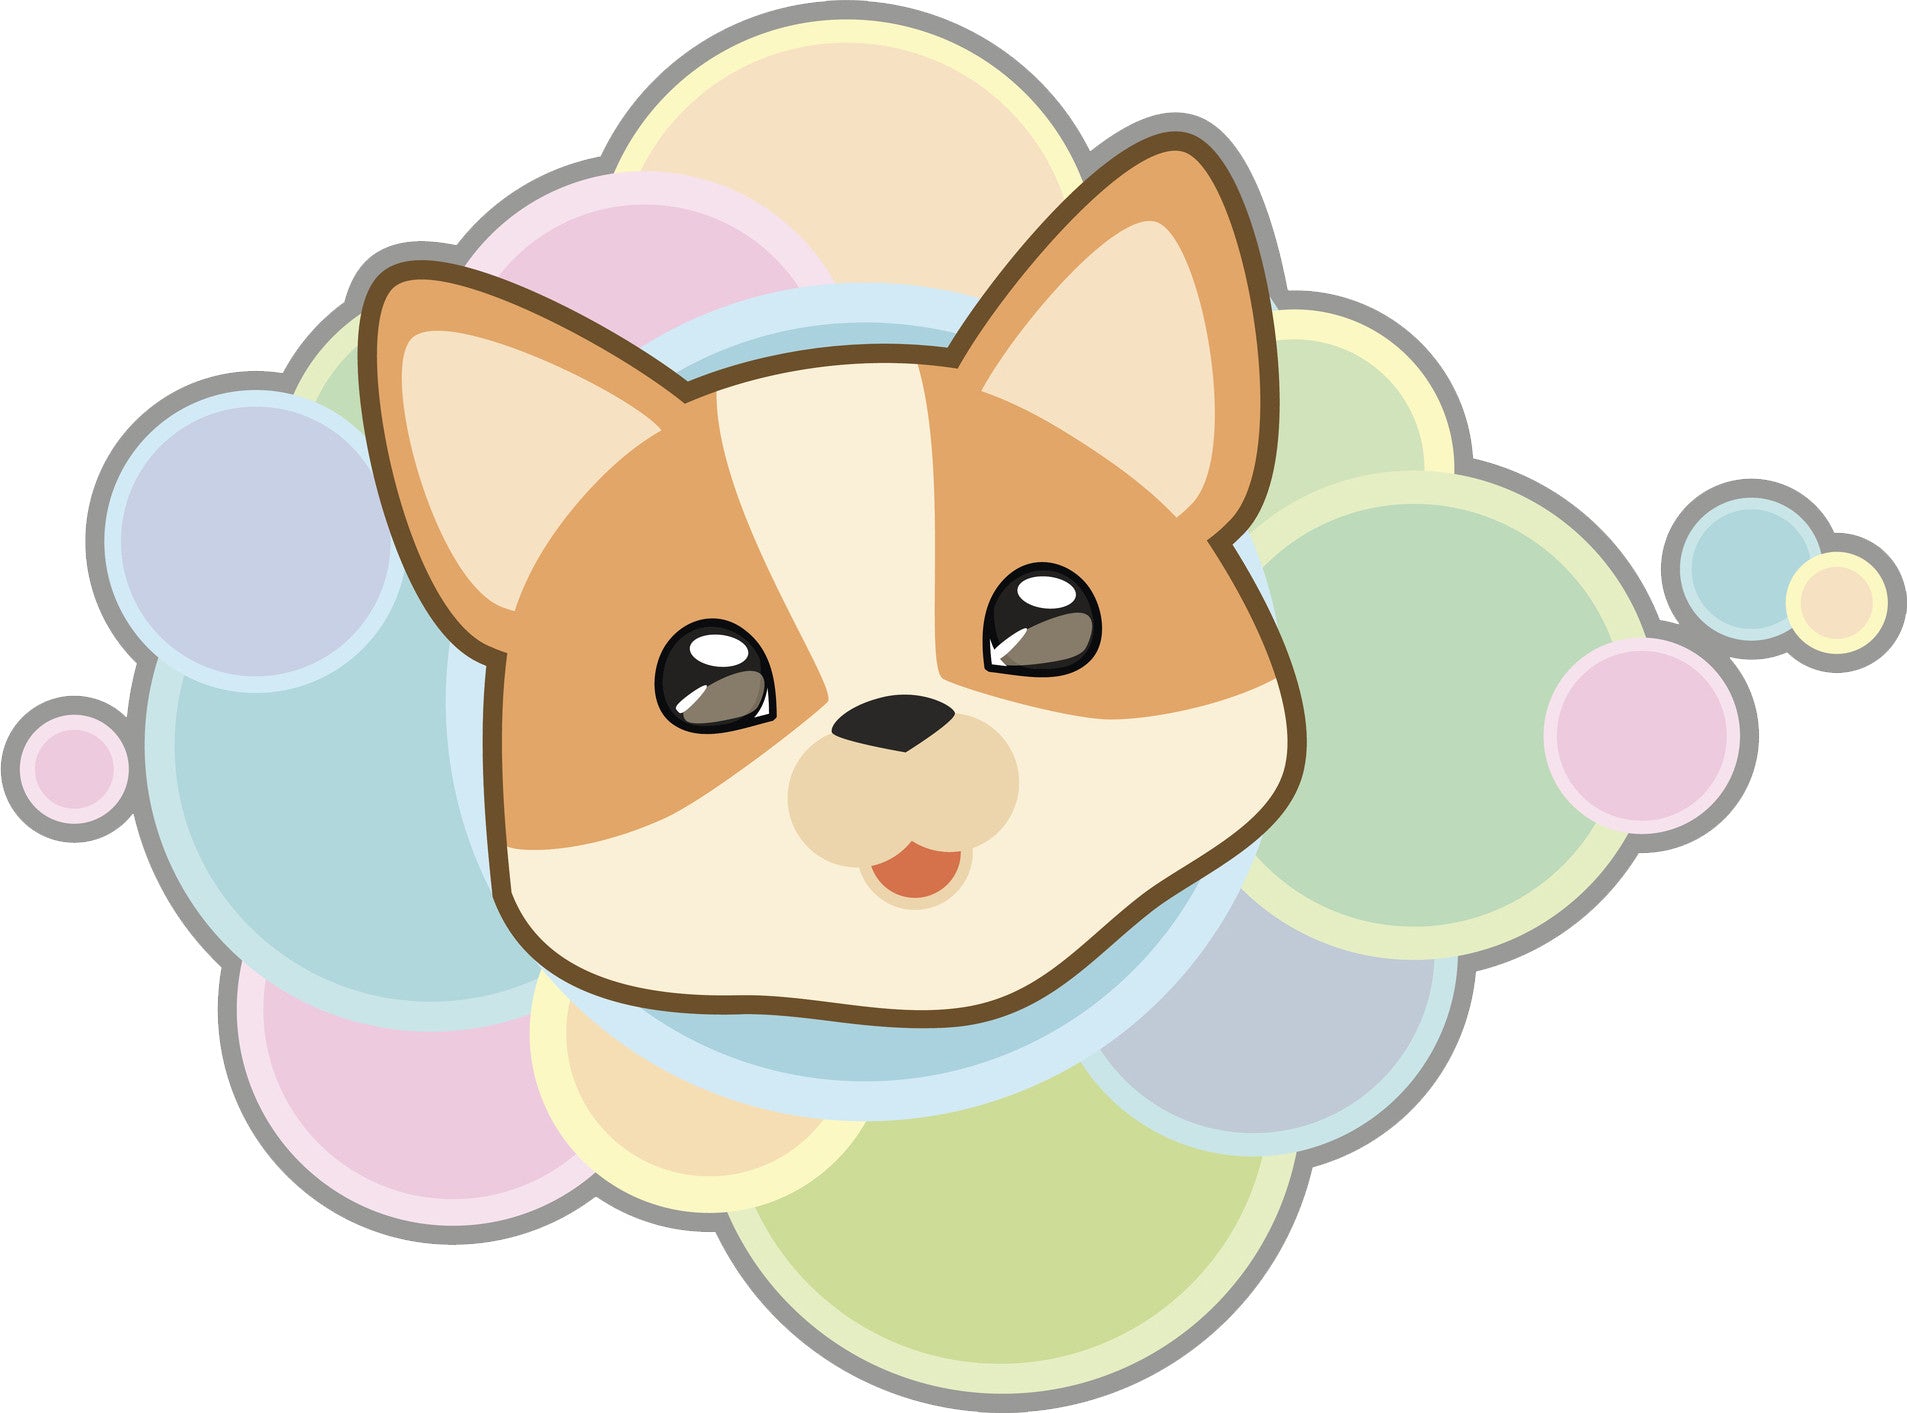 Cute Adorable Kawaii Puppy Dog Cartoon with Rainbow Bubbles - Shiba In